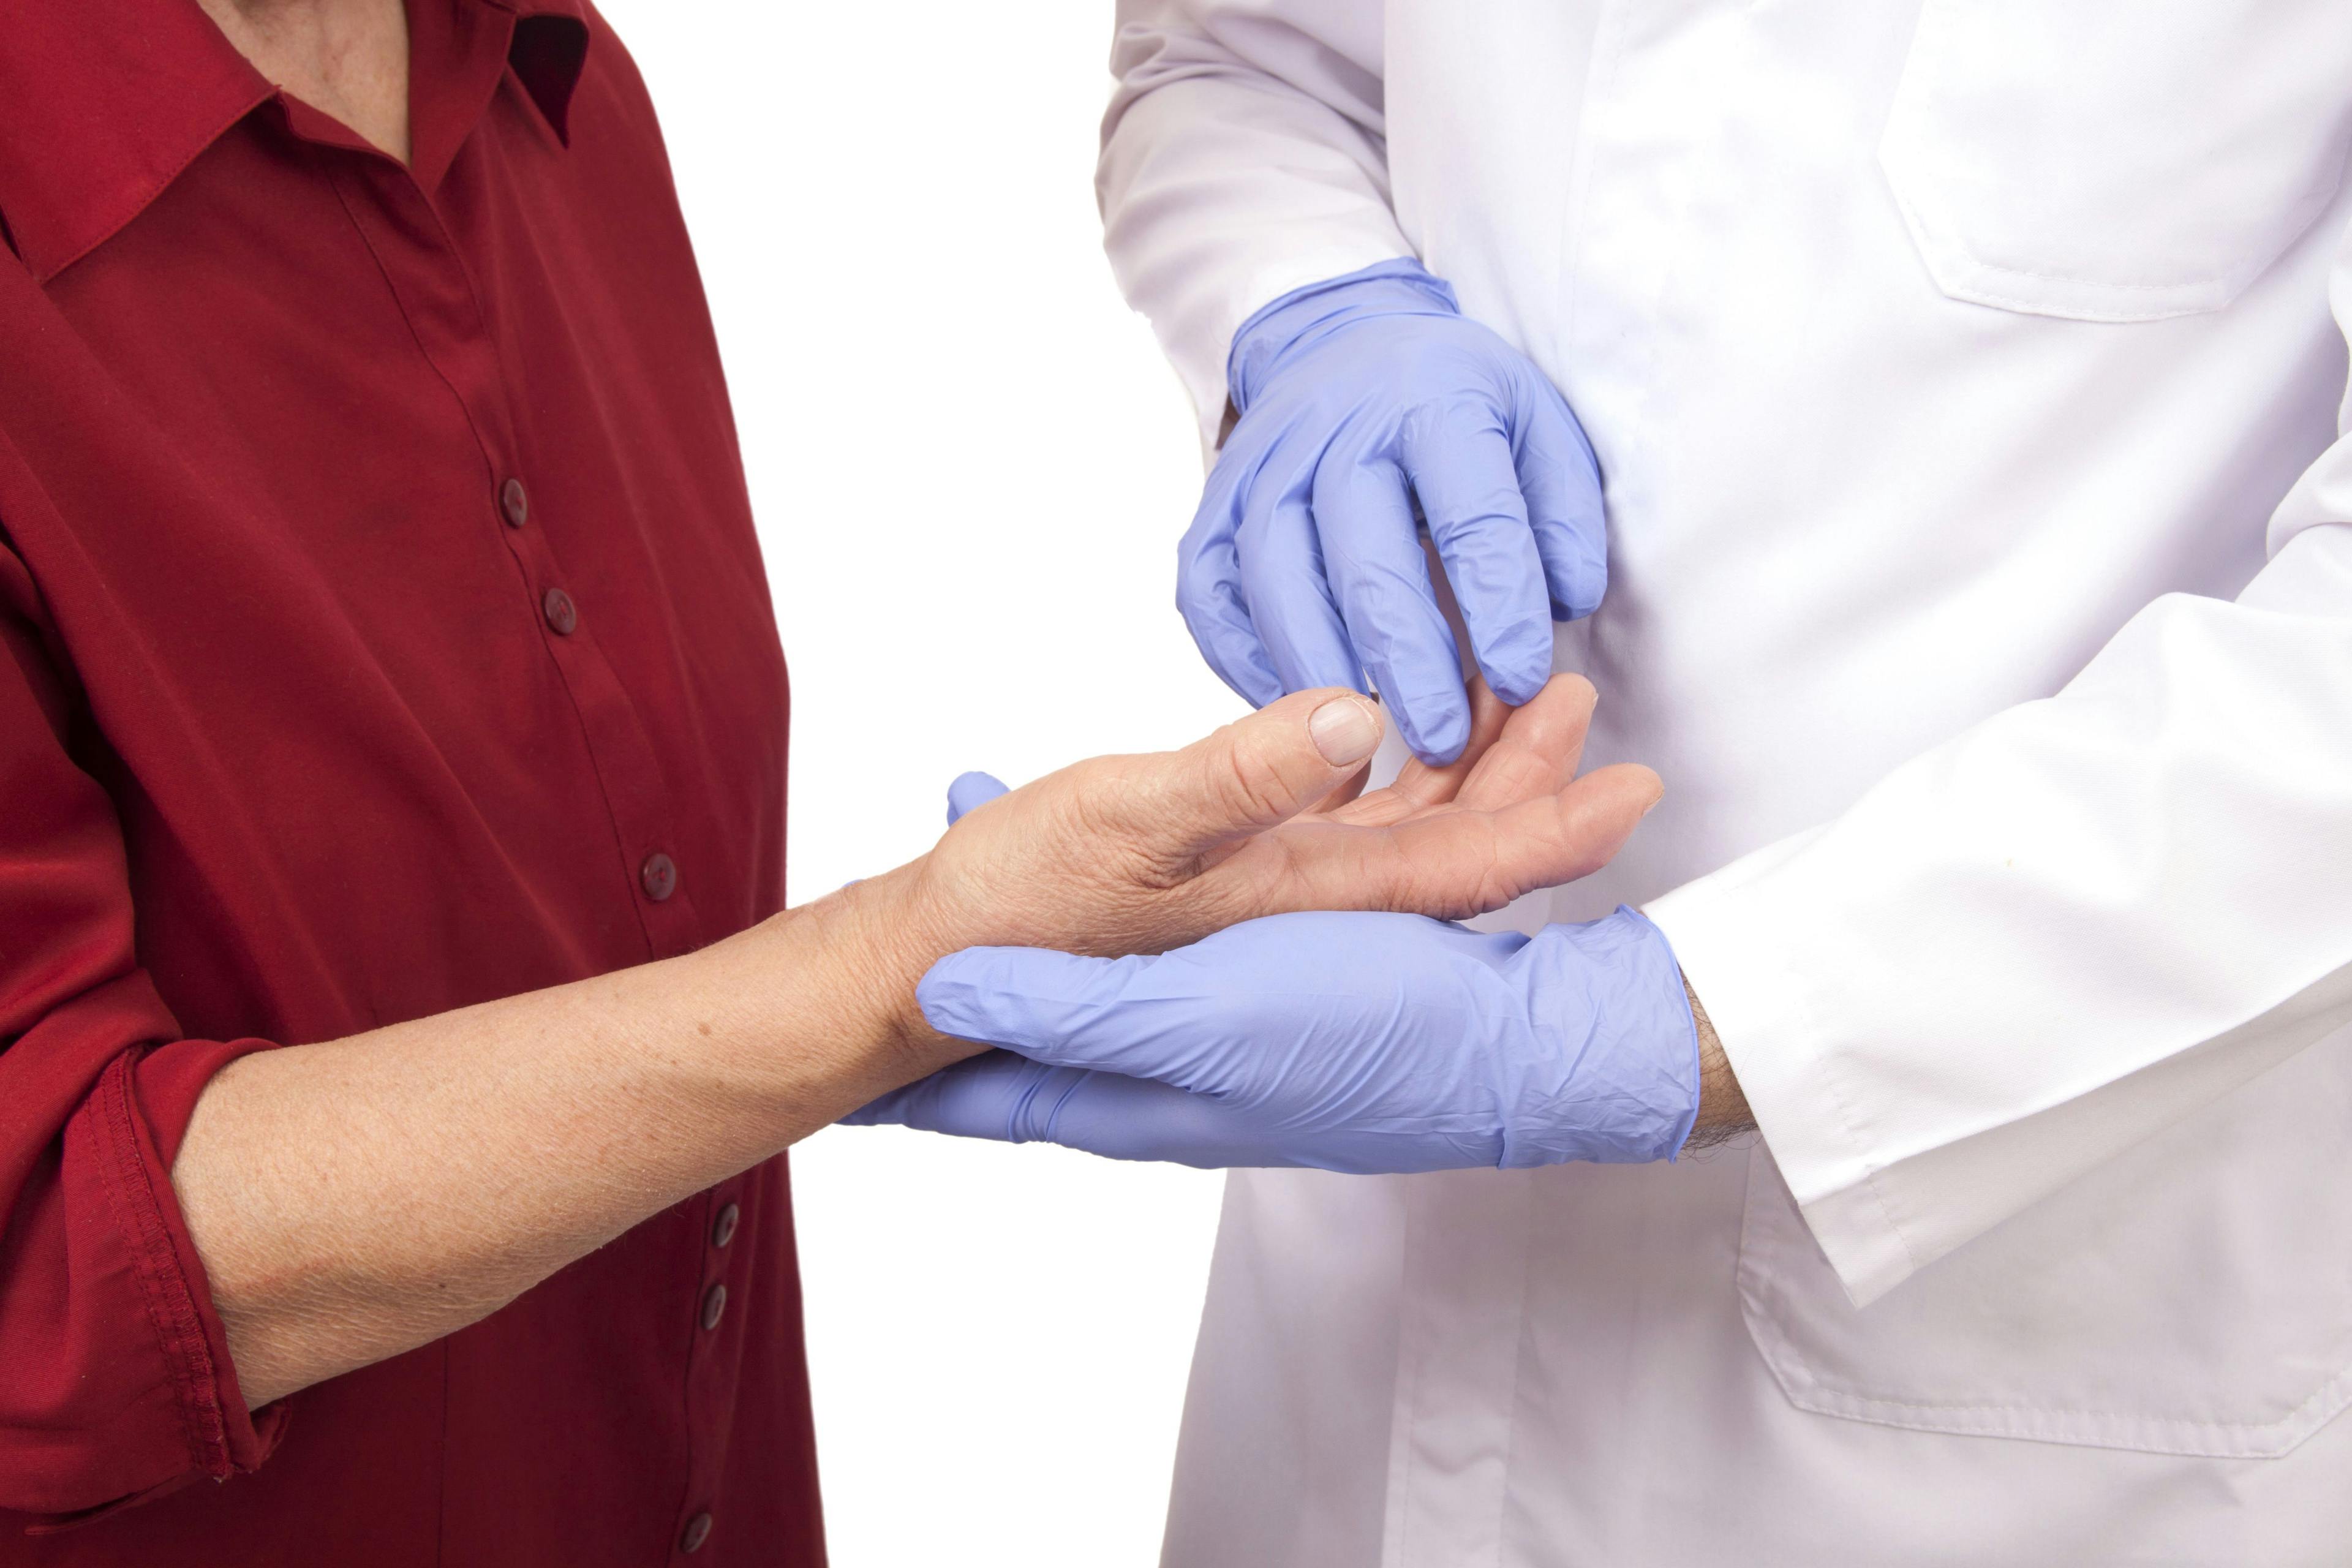 Doctor examining patient with rheumatoid arthritis pain